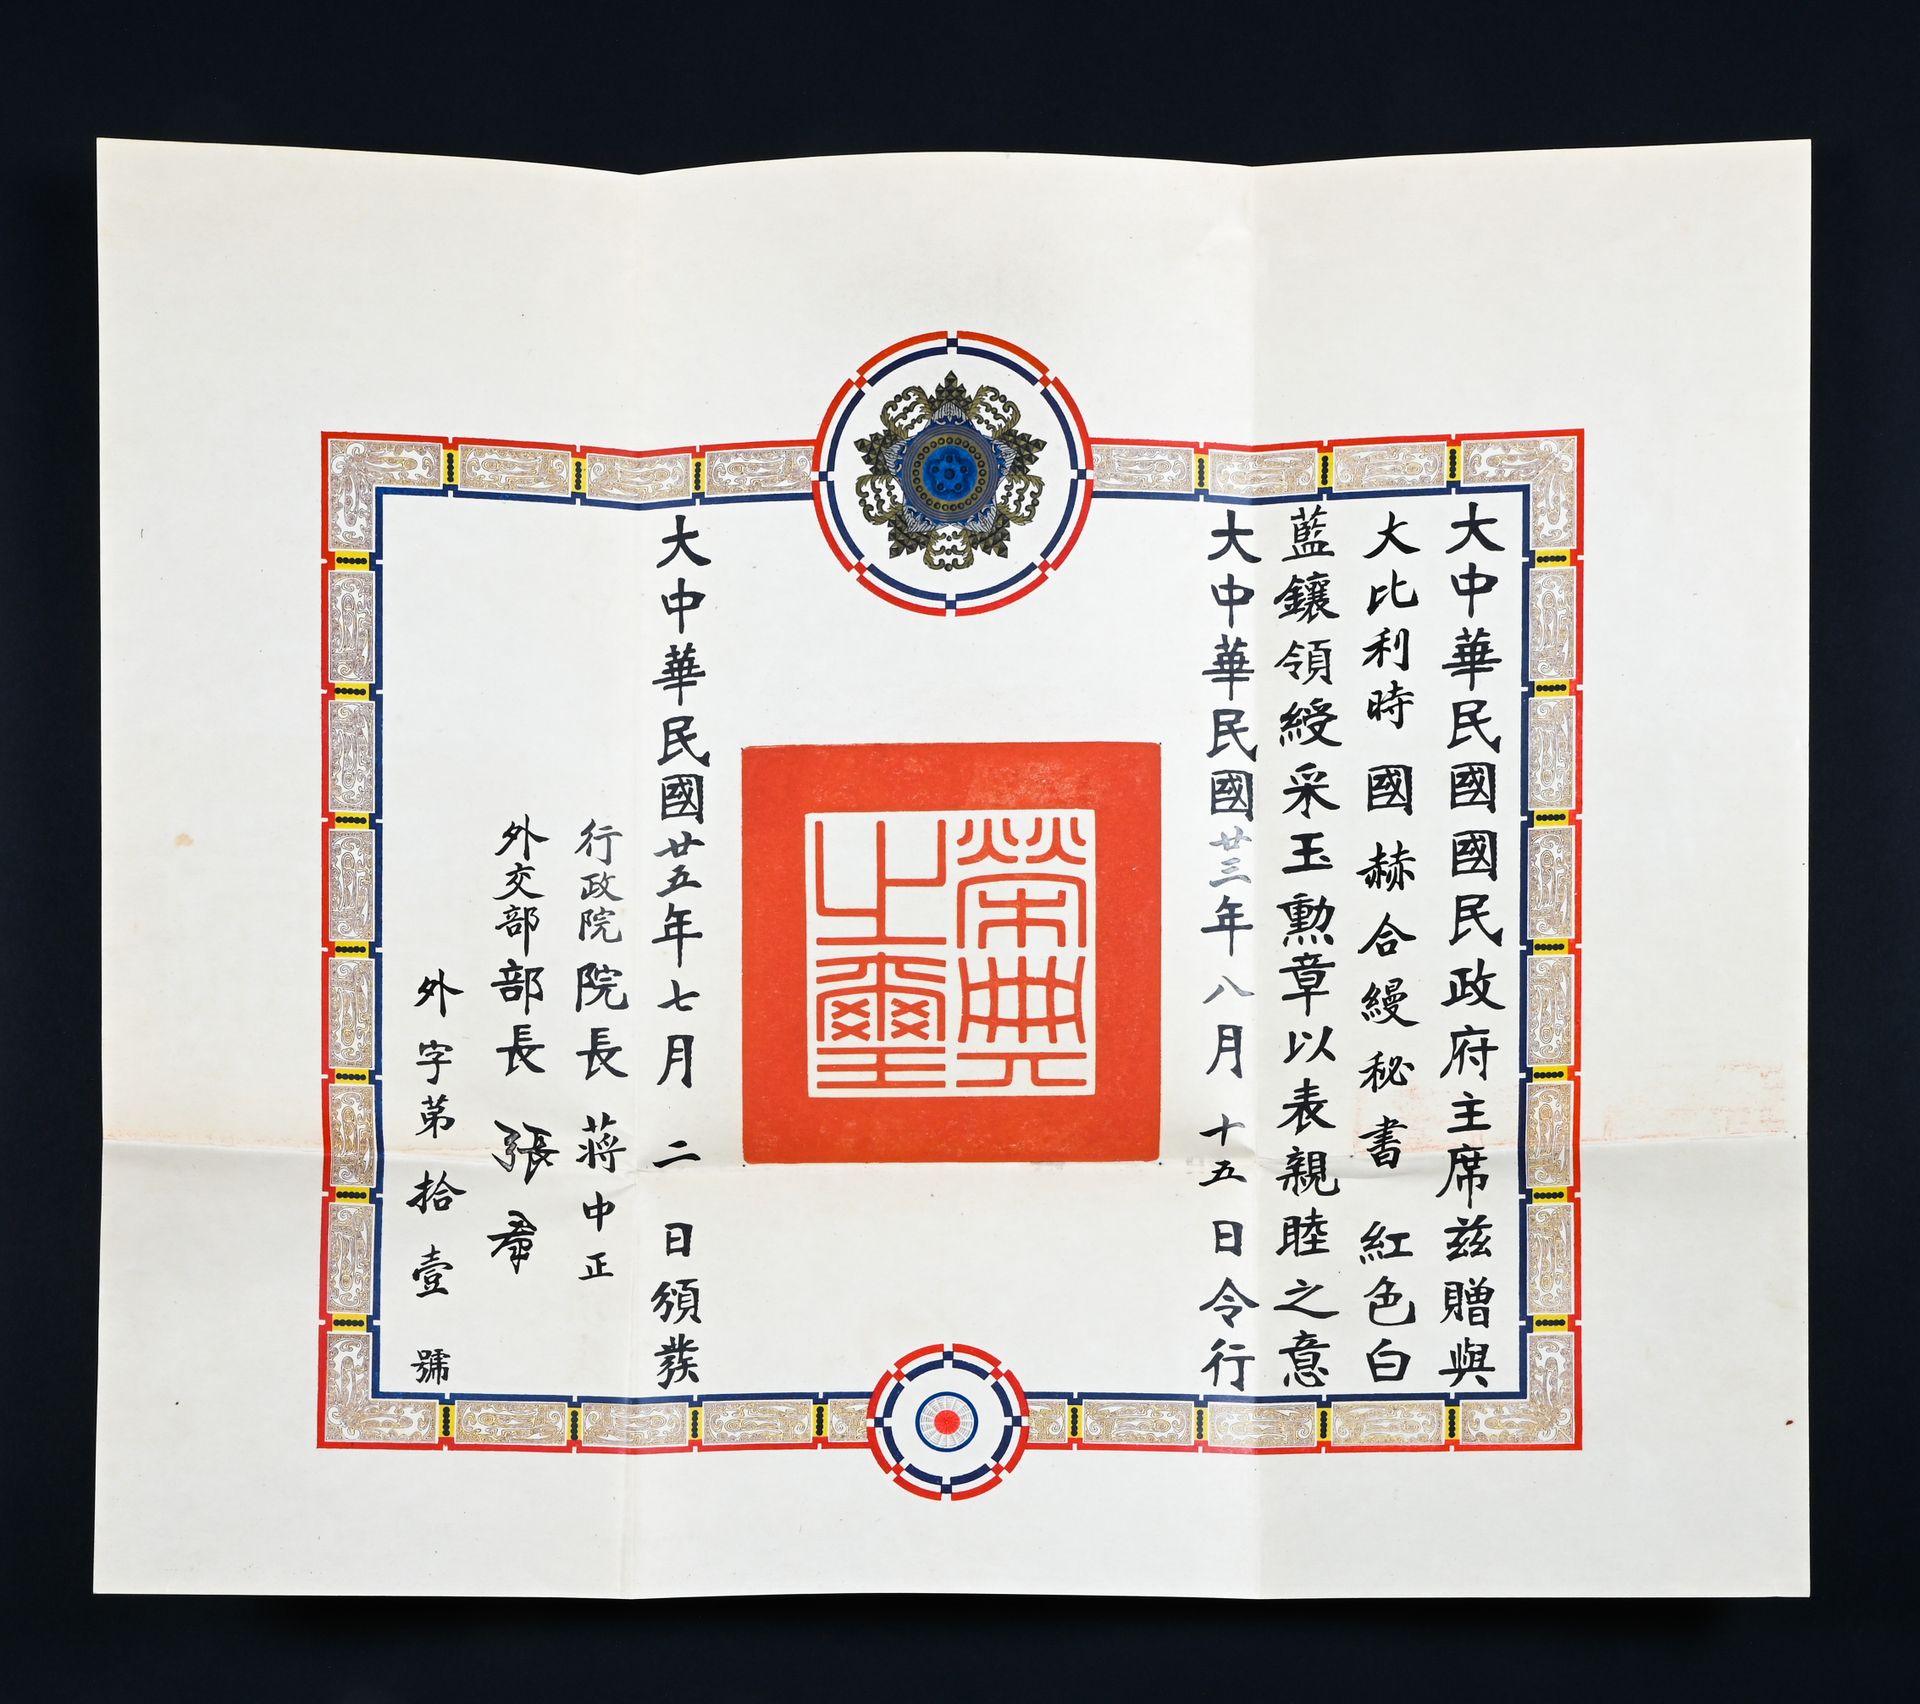 CHINE, CHINE,

Ordre du Jade Brillant,



Fondé en 1933 par Chang Kai Shek, gran&hellip;